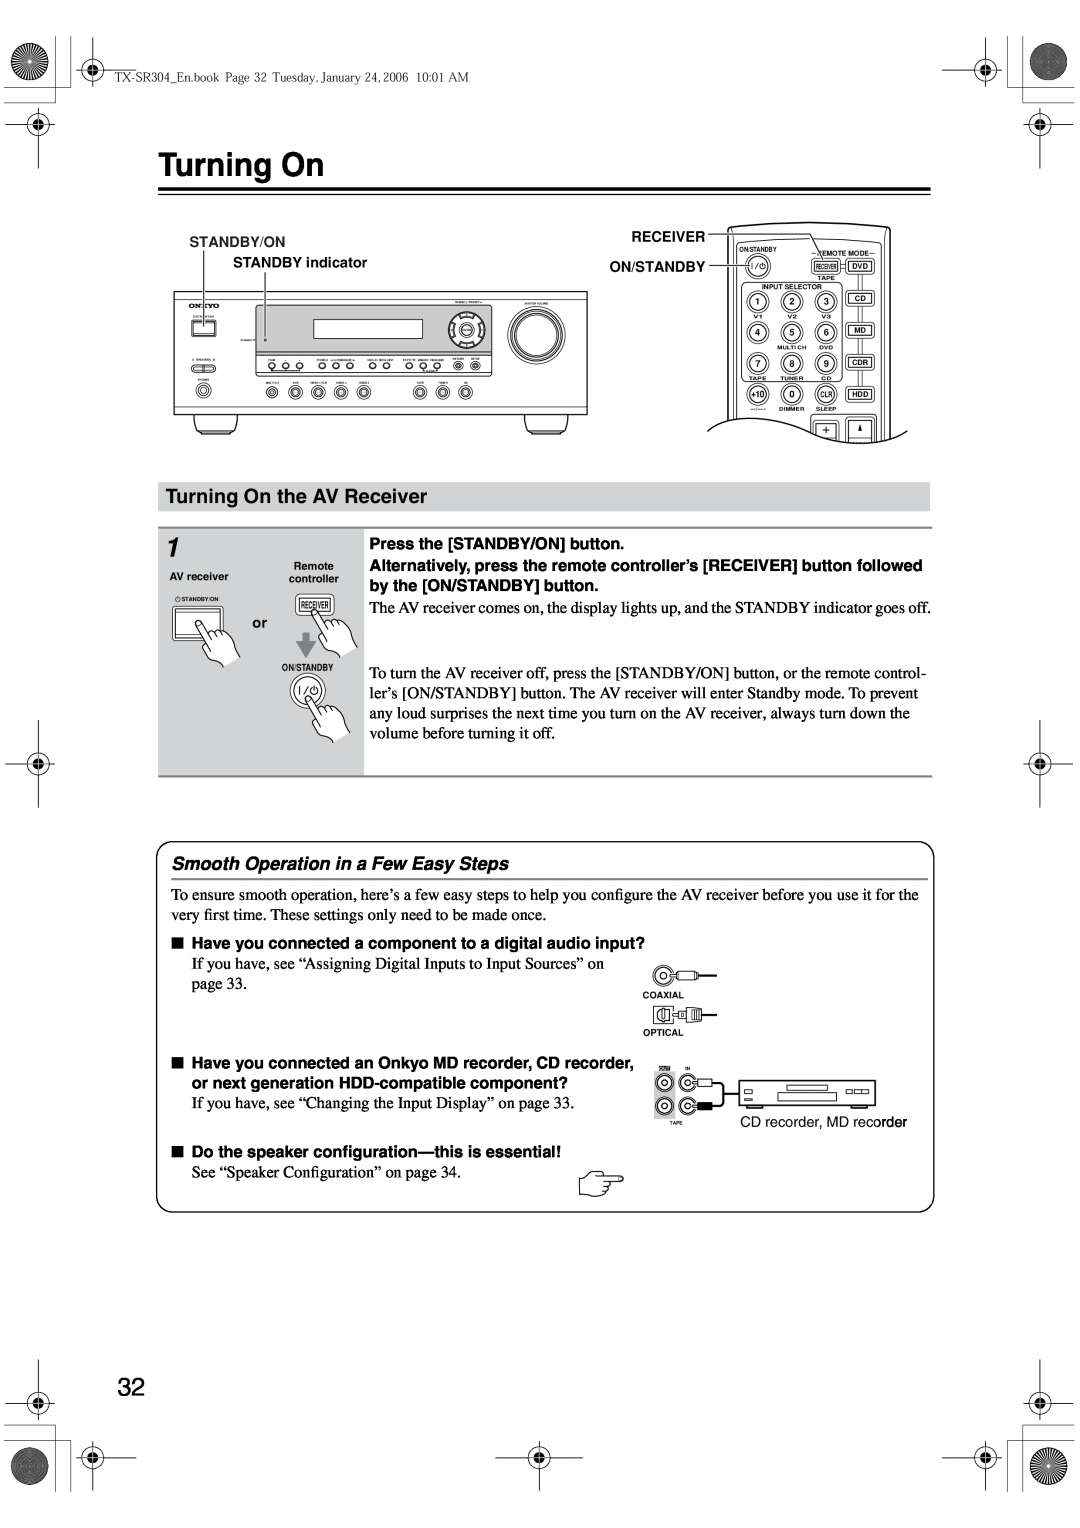 Onkyo TX-SR304E, TX-SR8440, TX-SR404 instruction manual Turning On the AV Receiver, Smooth Operation in a Few Easy Steps 